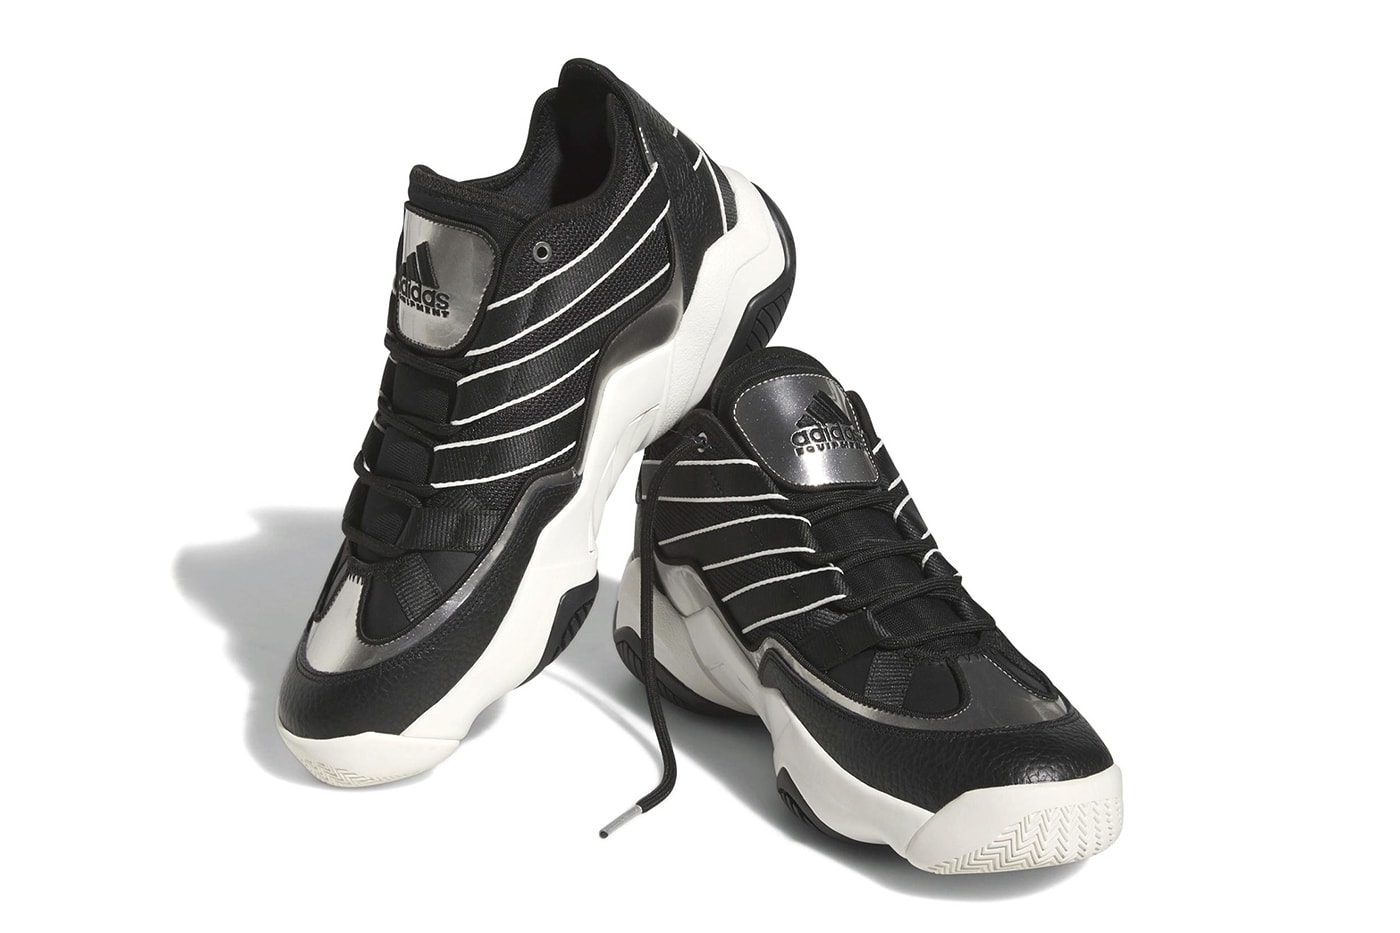 adidas Basketball Top Ten Kobe Bryant rooke shoes 3 stripe 2010 lakers black white release info date price